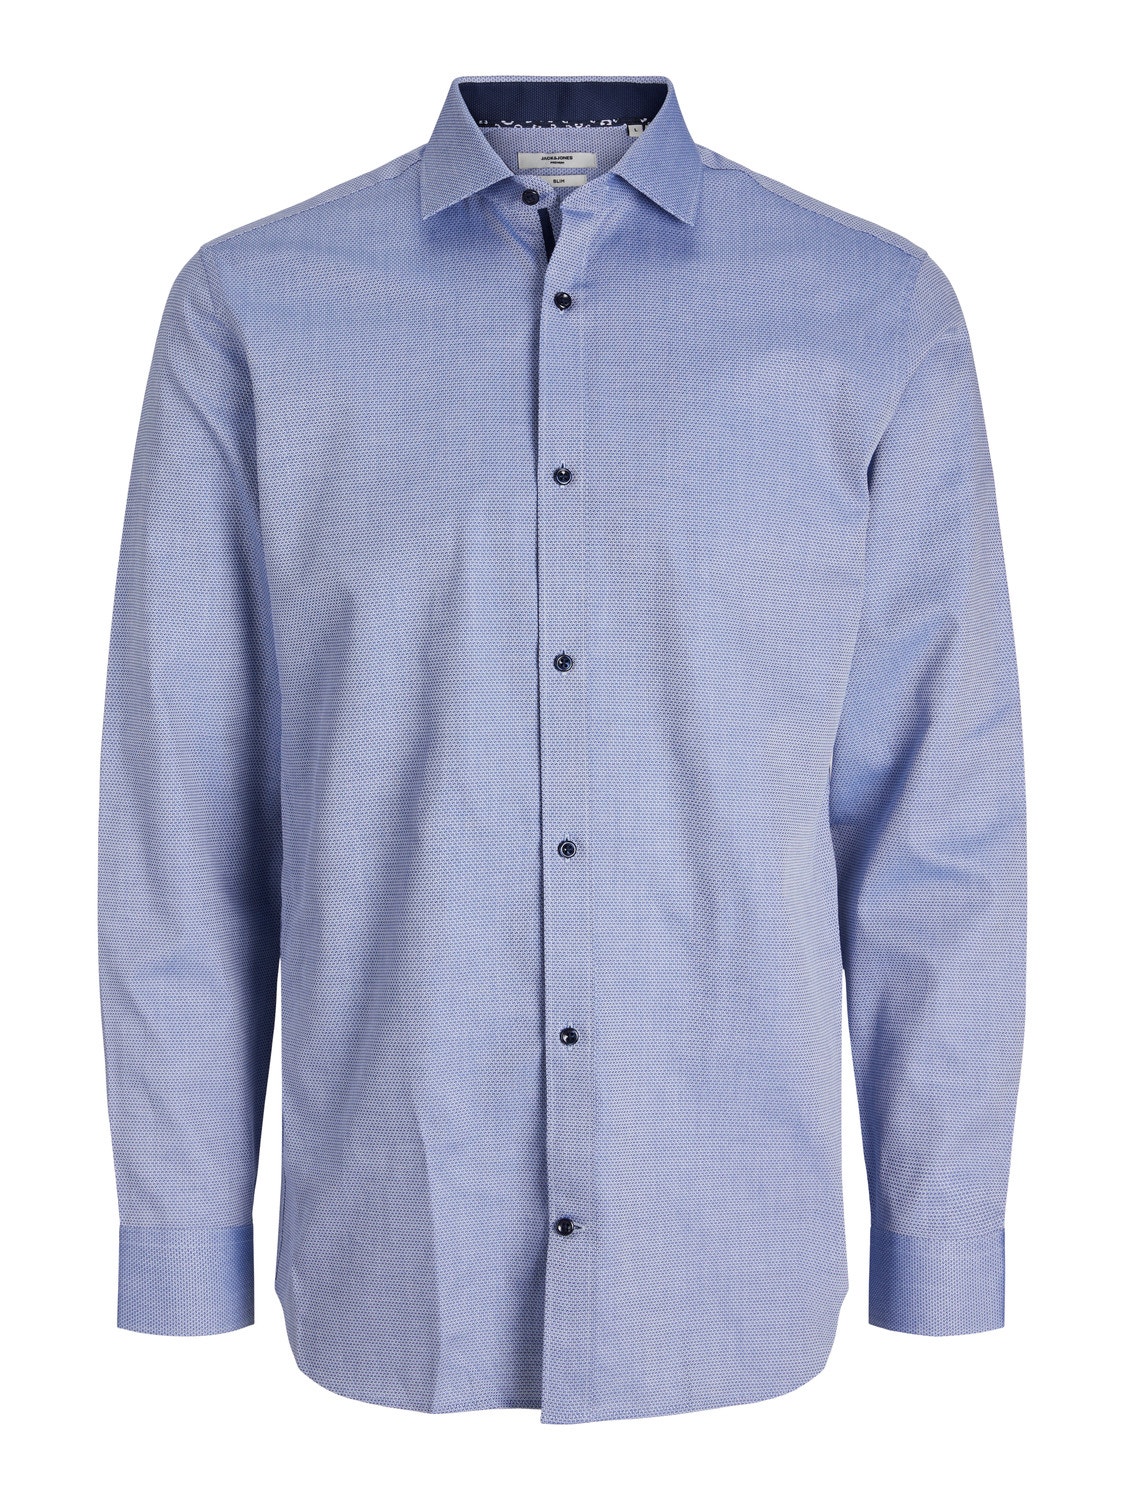 Jack & Jones Slim Fit Oficialūs marškiniai -Cashmere Blue - 12238034